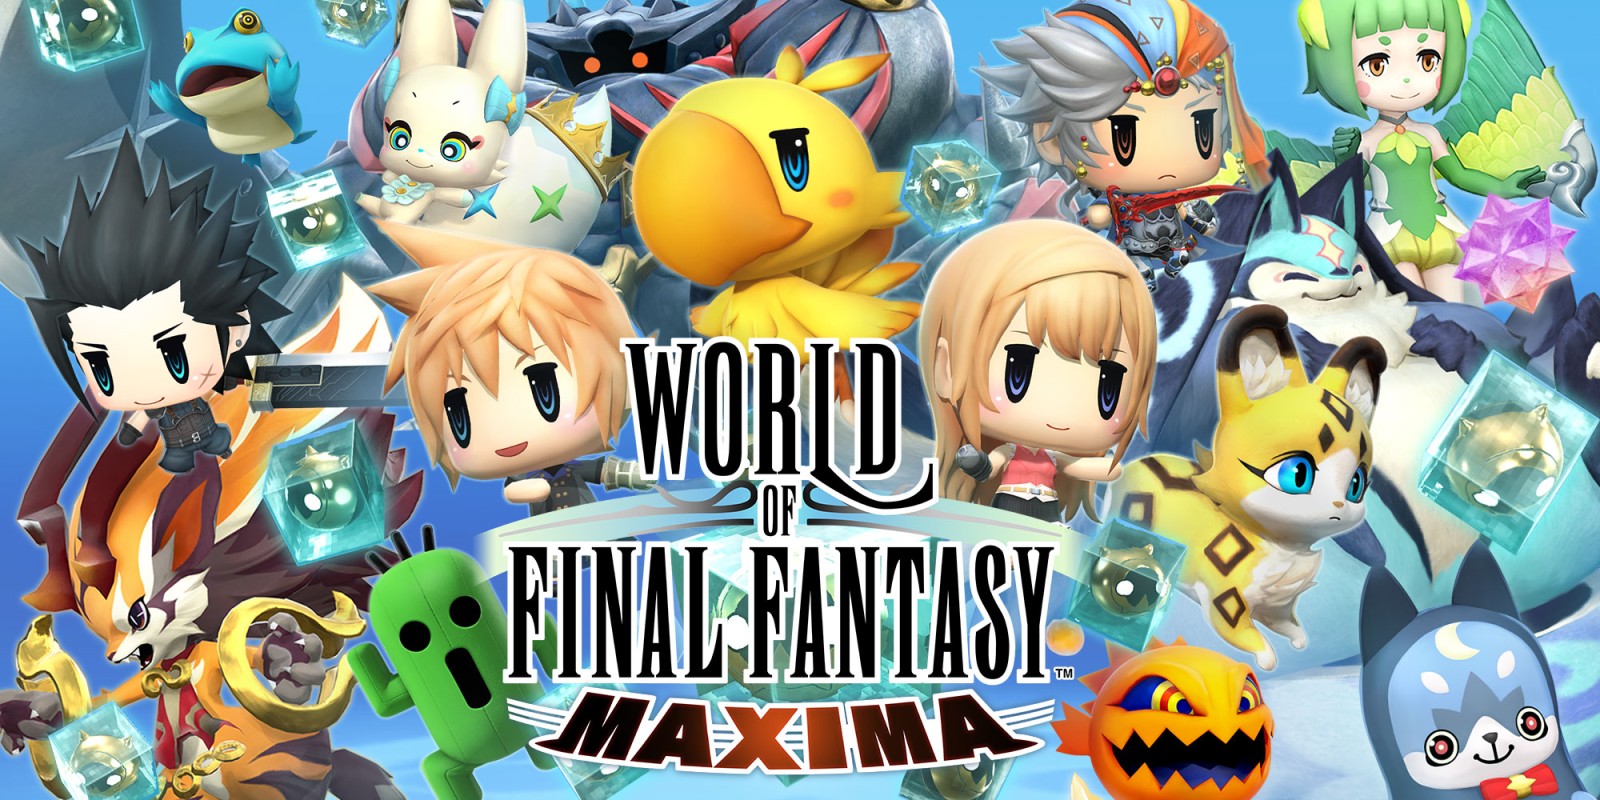 World of Final Fantasy Maxima | Review